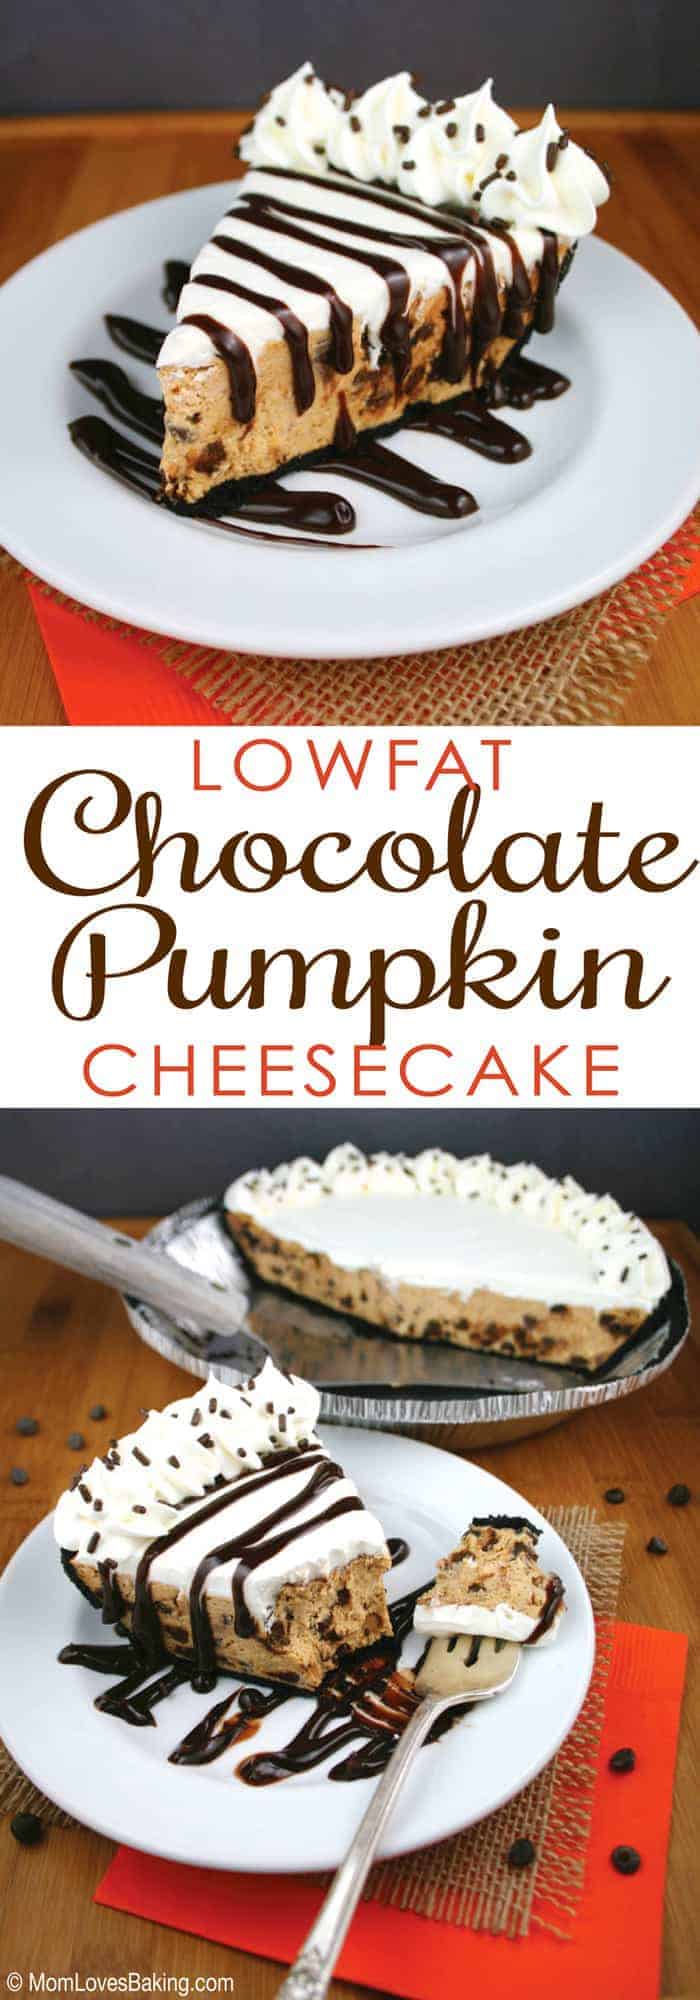 Lowfat-Chocolate-Pumpkin-Cheesecake-Long